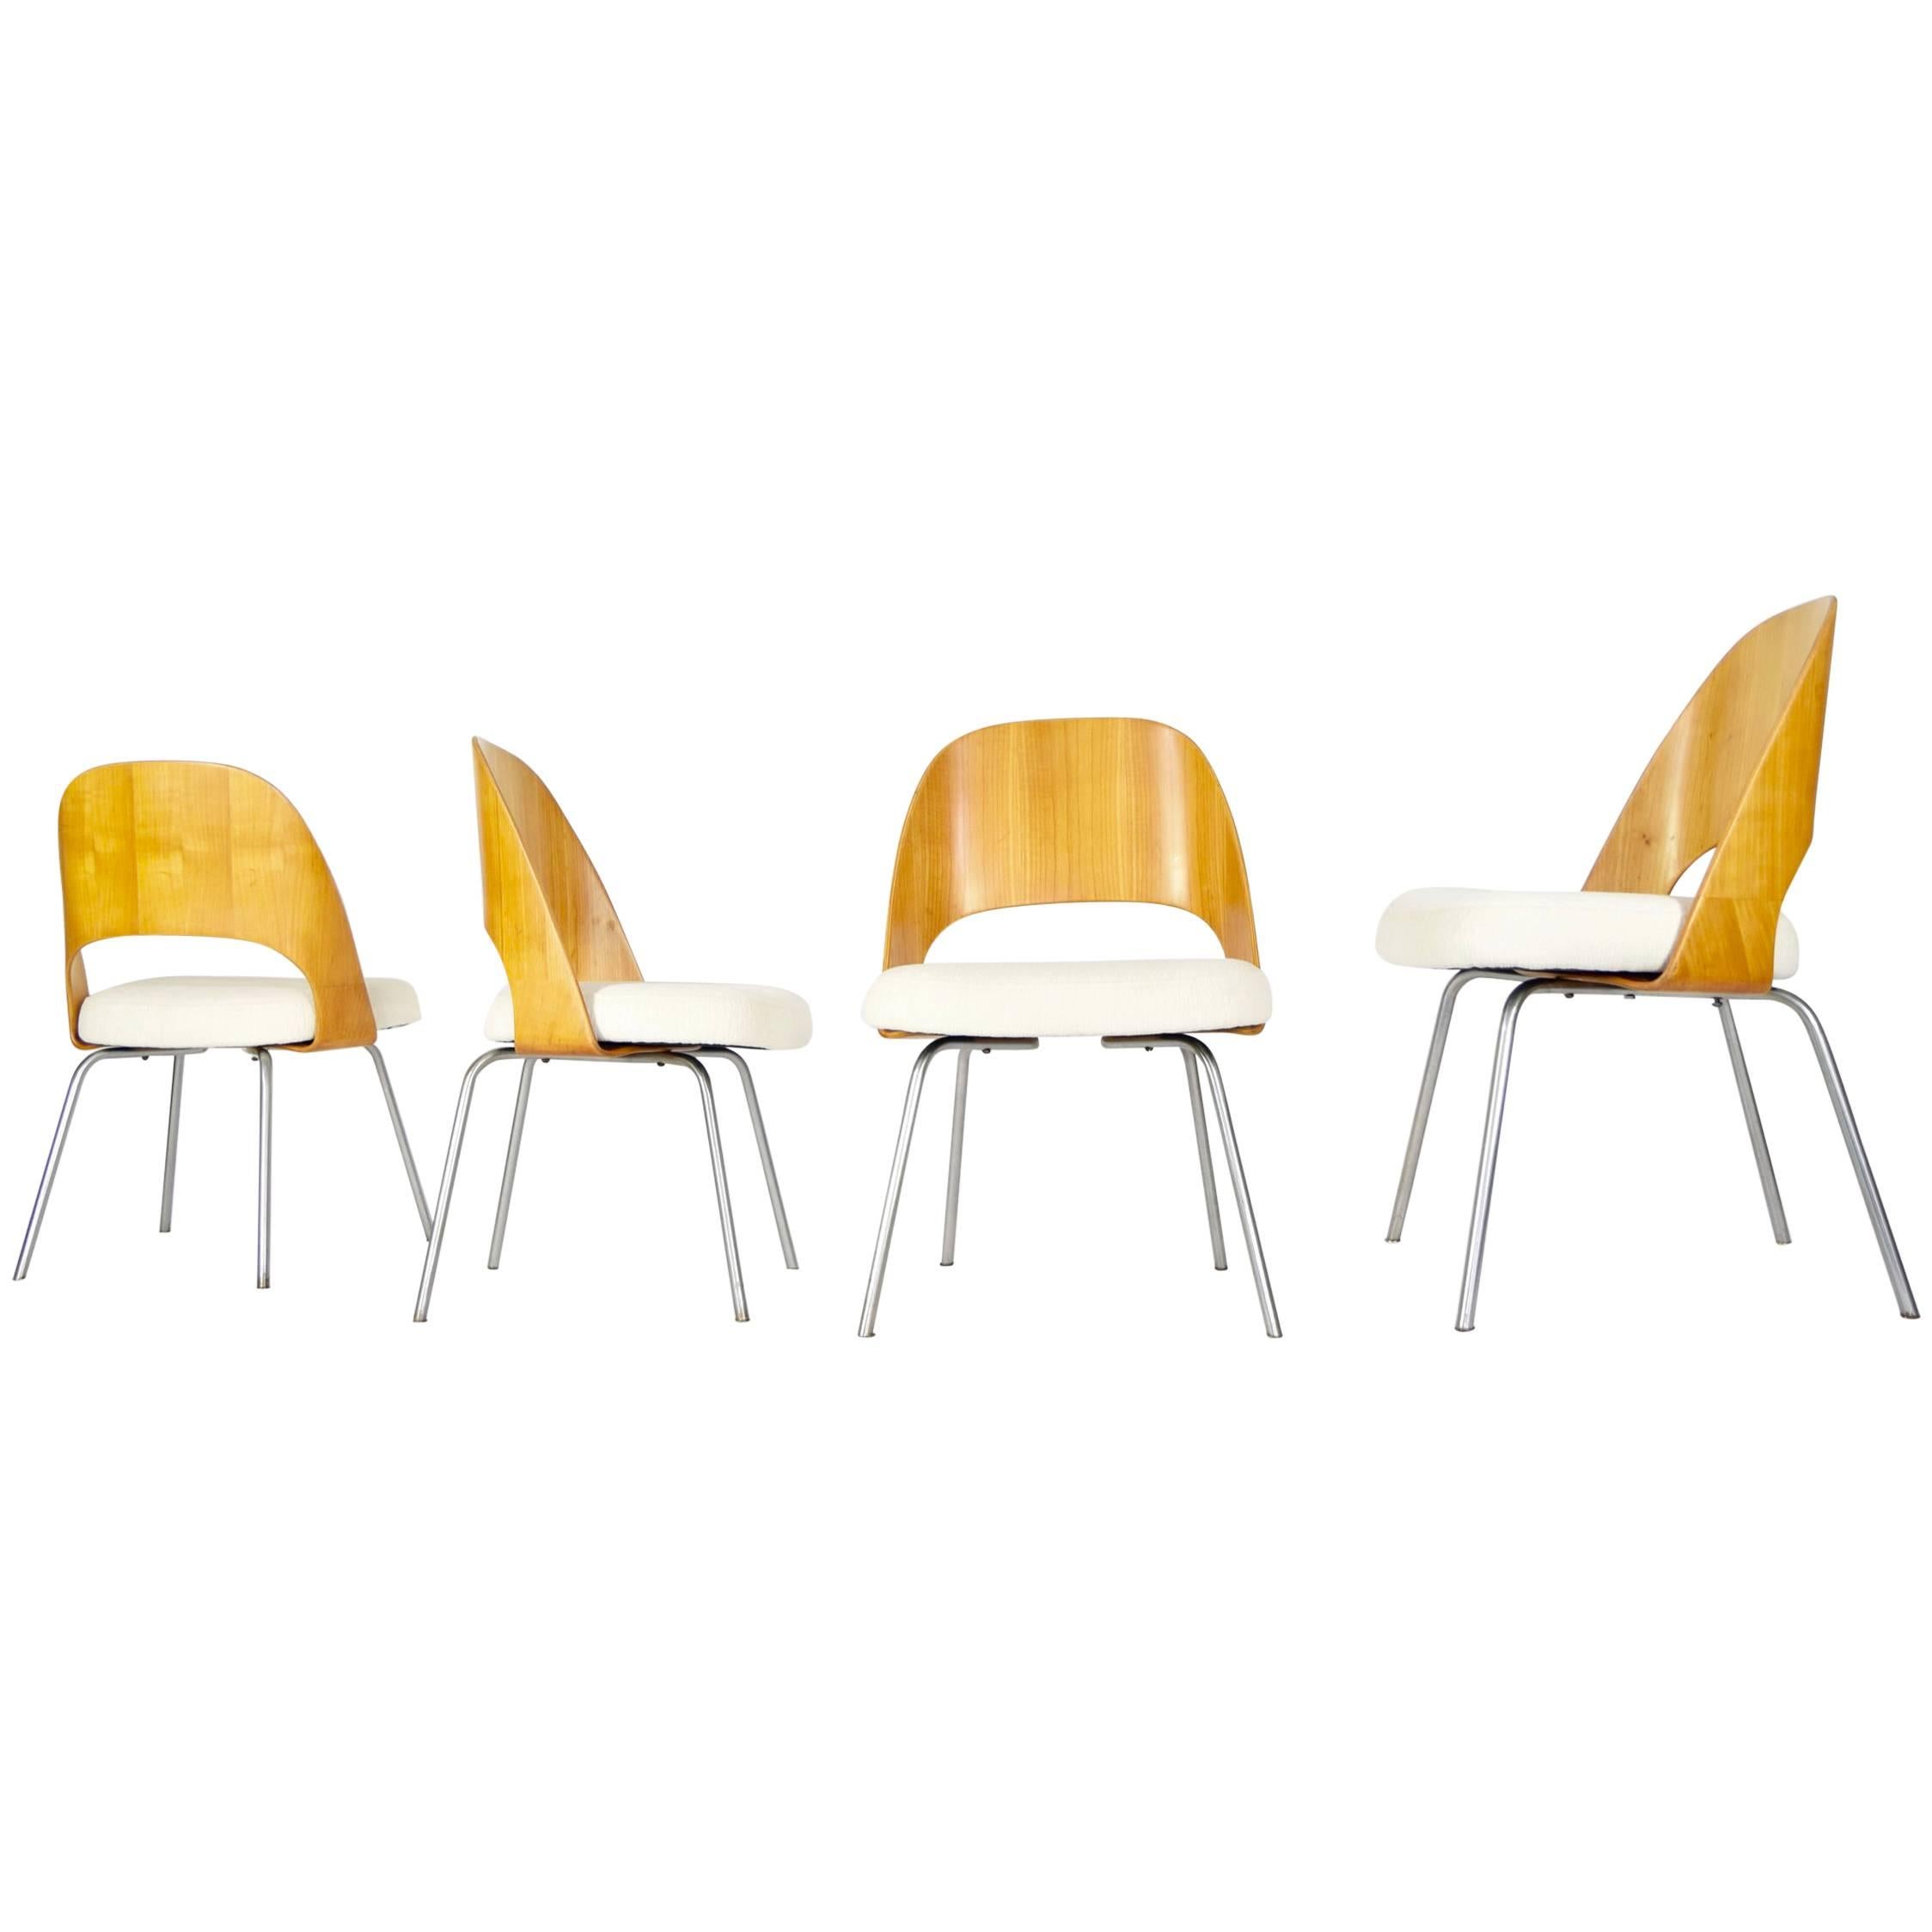 Rare Set of Eero Saarinen for Knoll Executive Chairs with Wood Backs